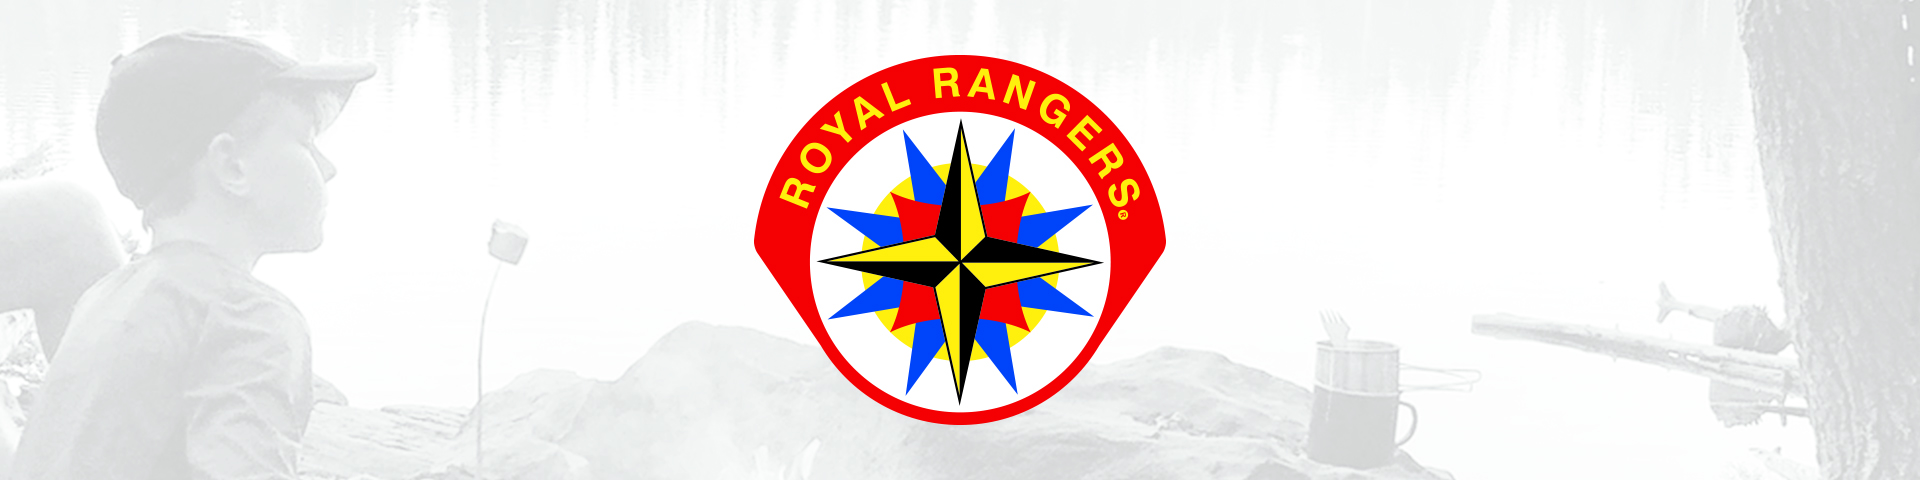 Royal_Rangers_1920x480.jpg